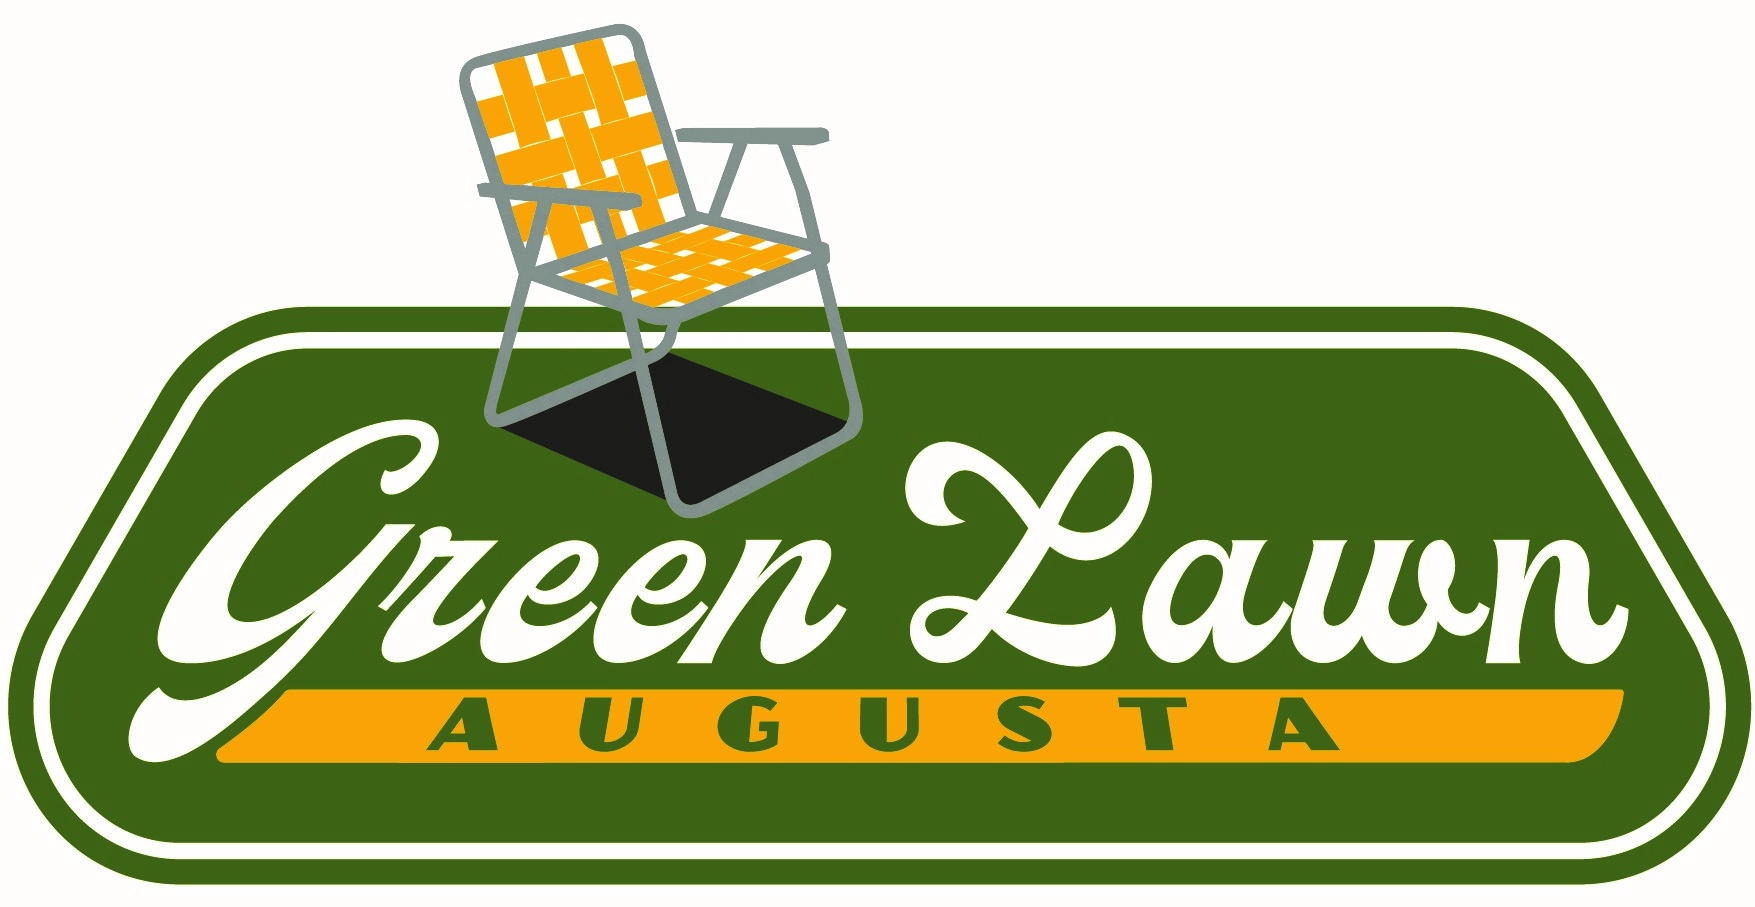 Augusta Lawn Care | Green Lawn Augusta Logo